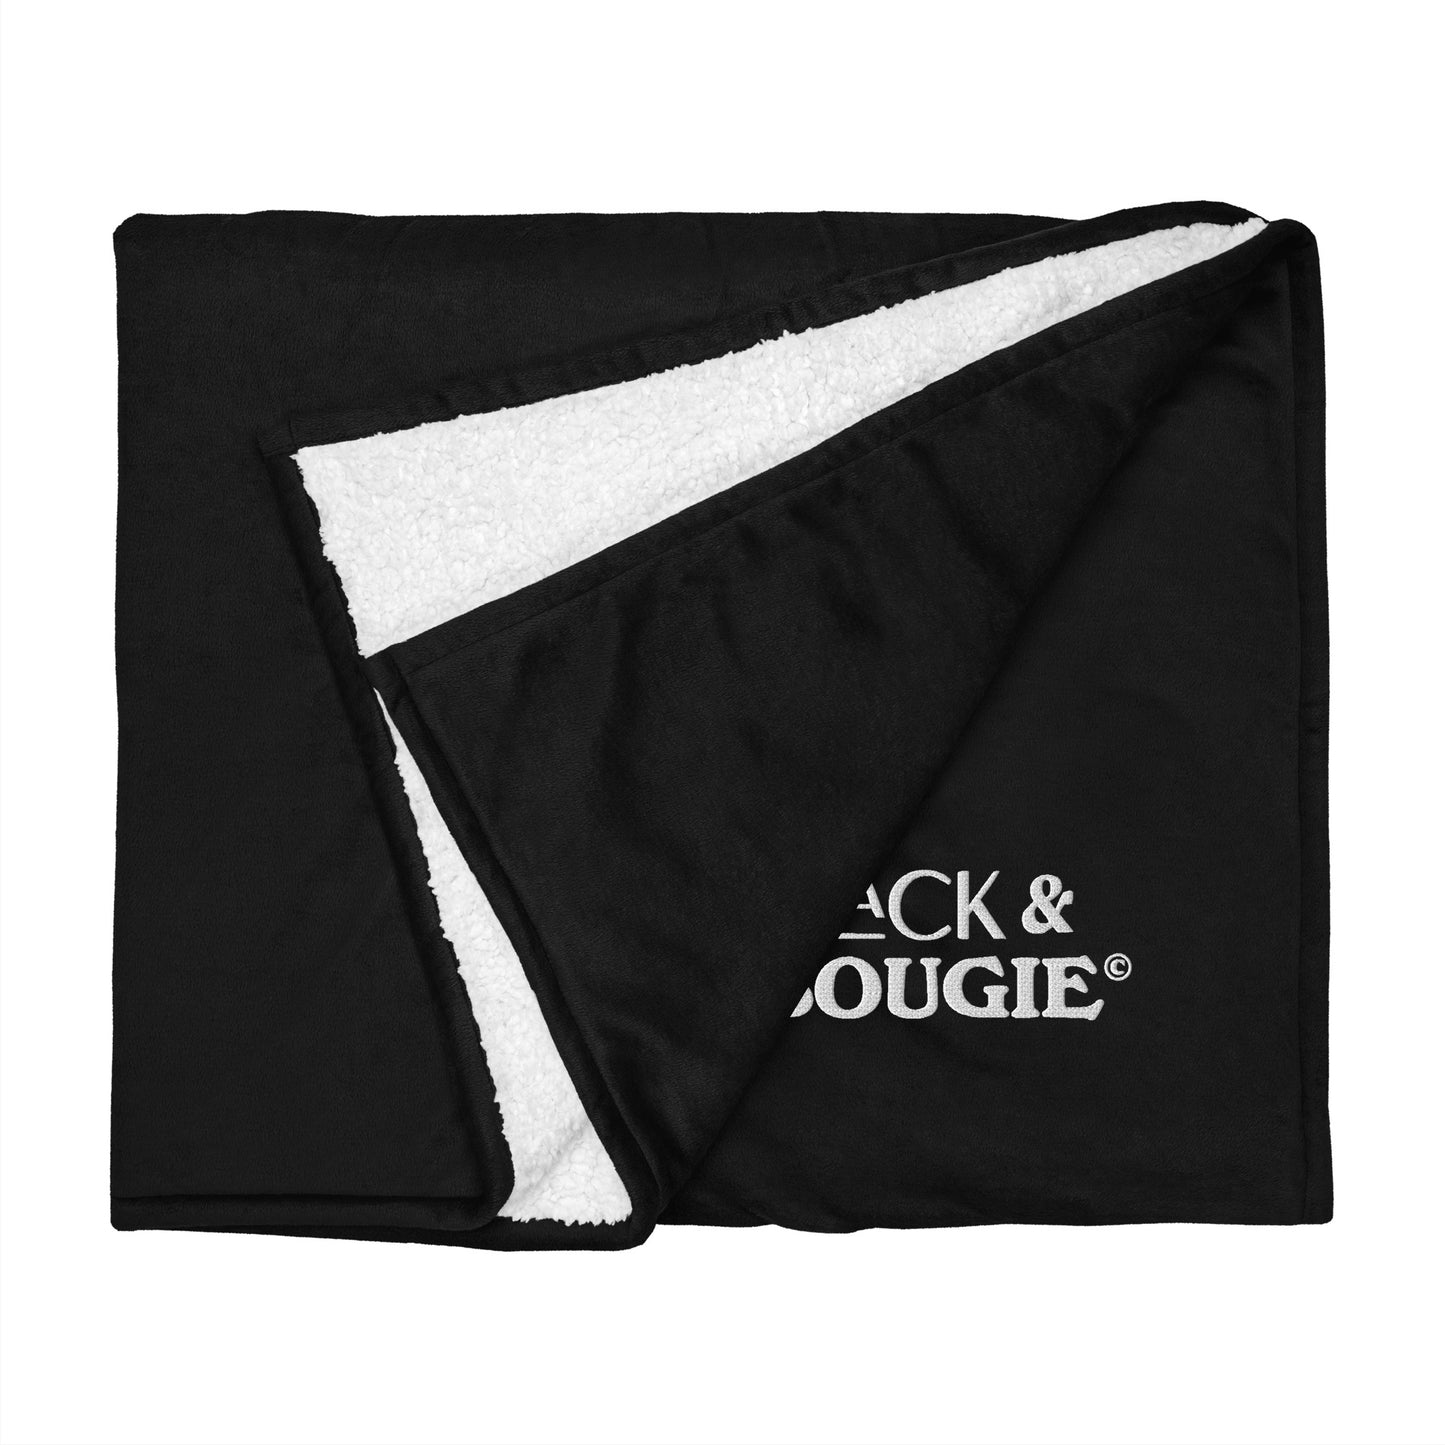 Black & Bougie Premium sherpa blanket